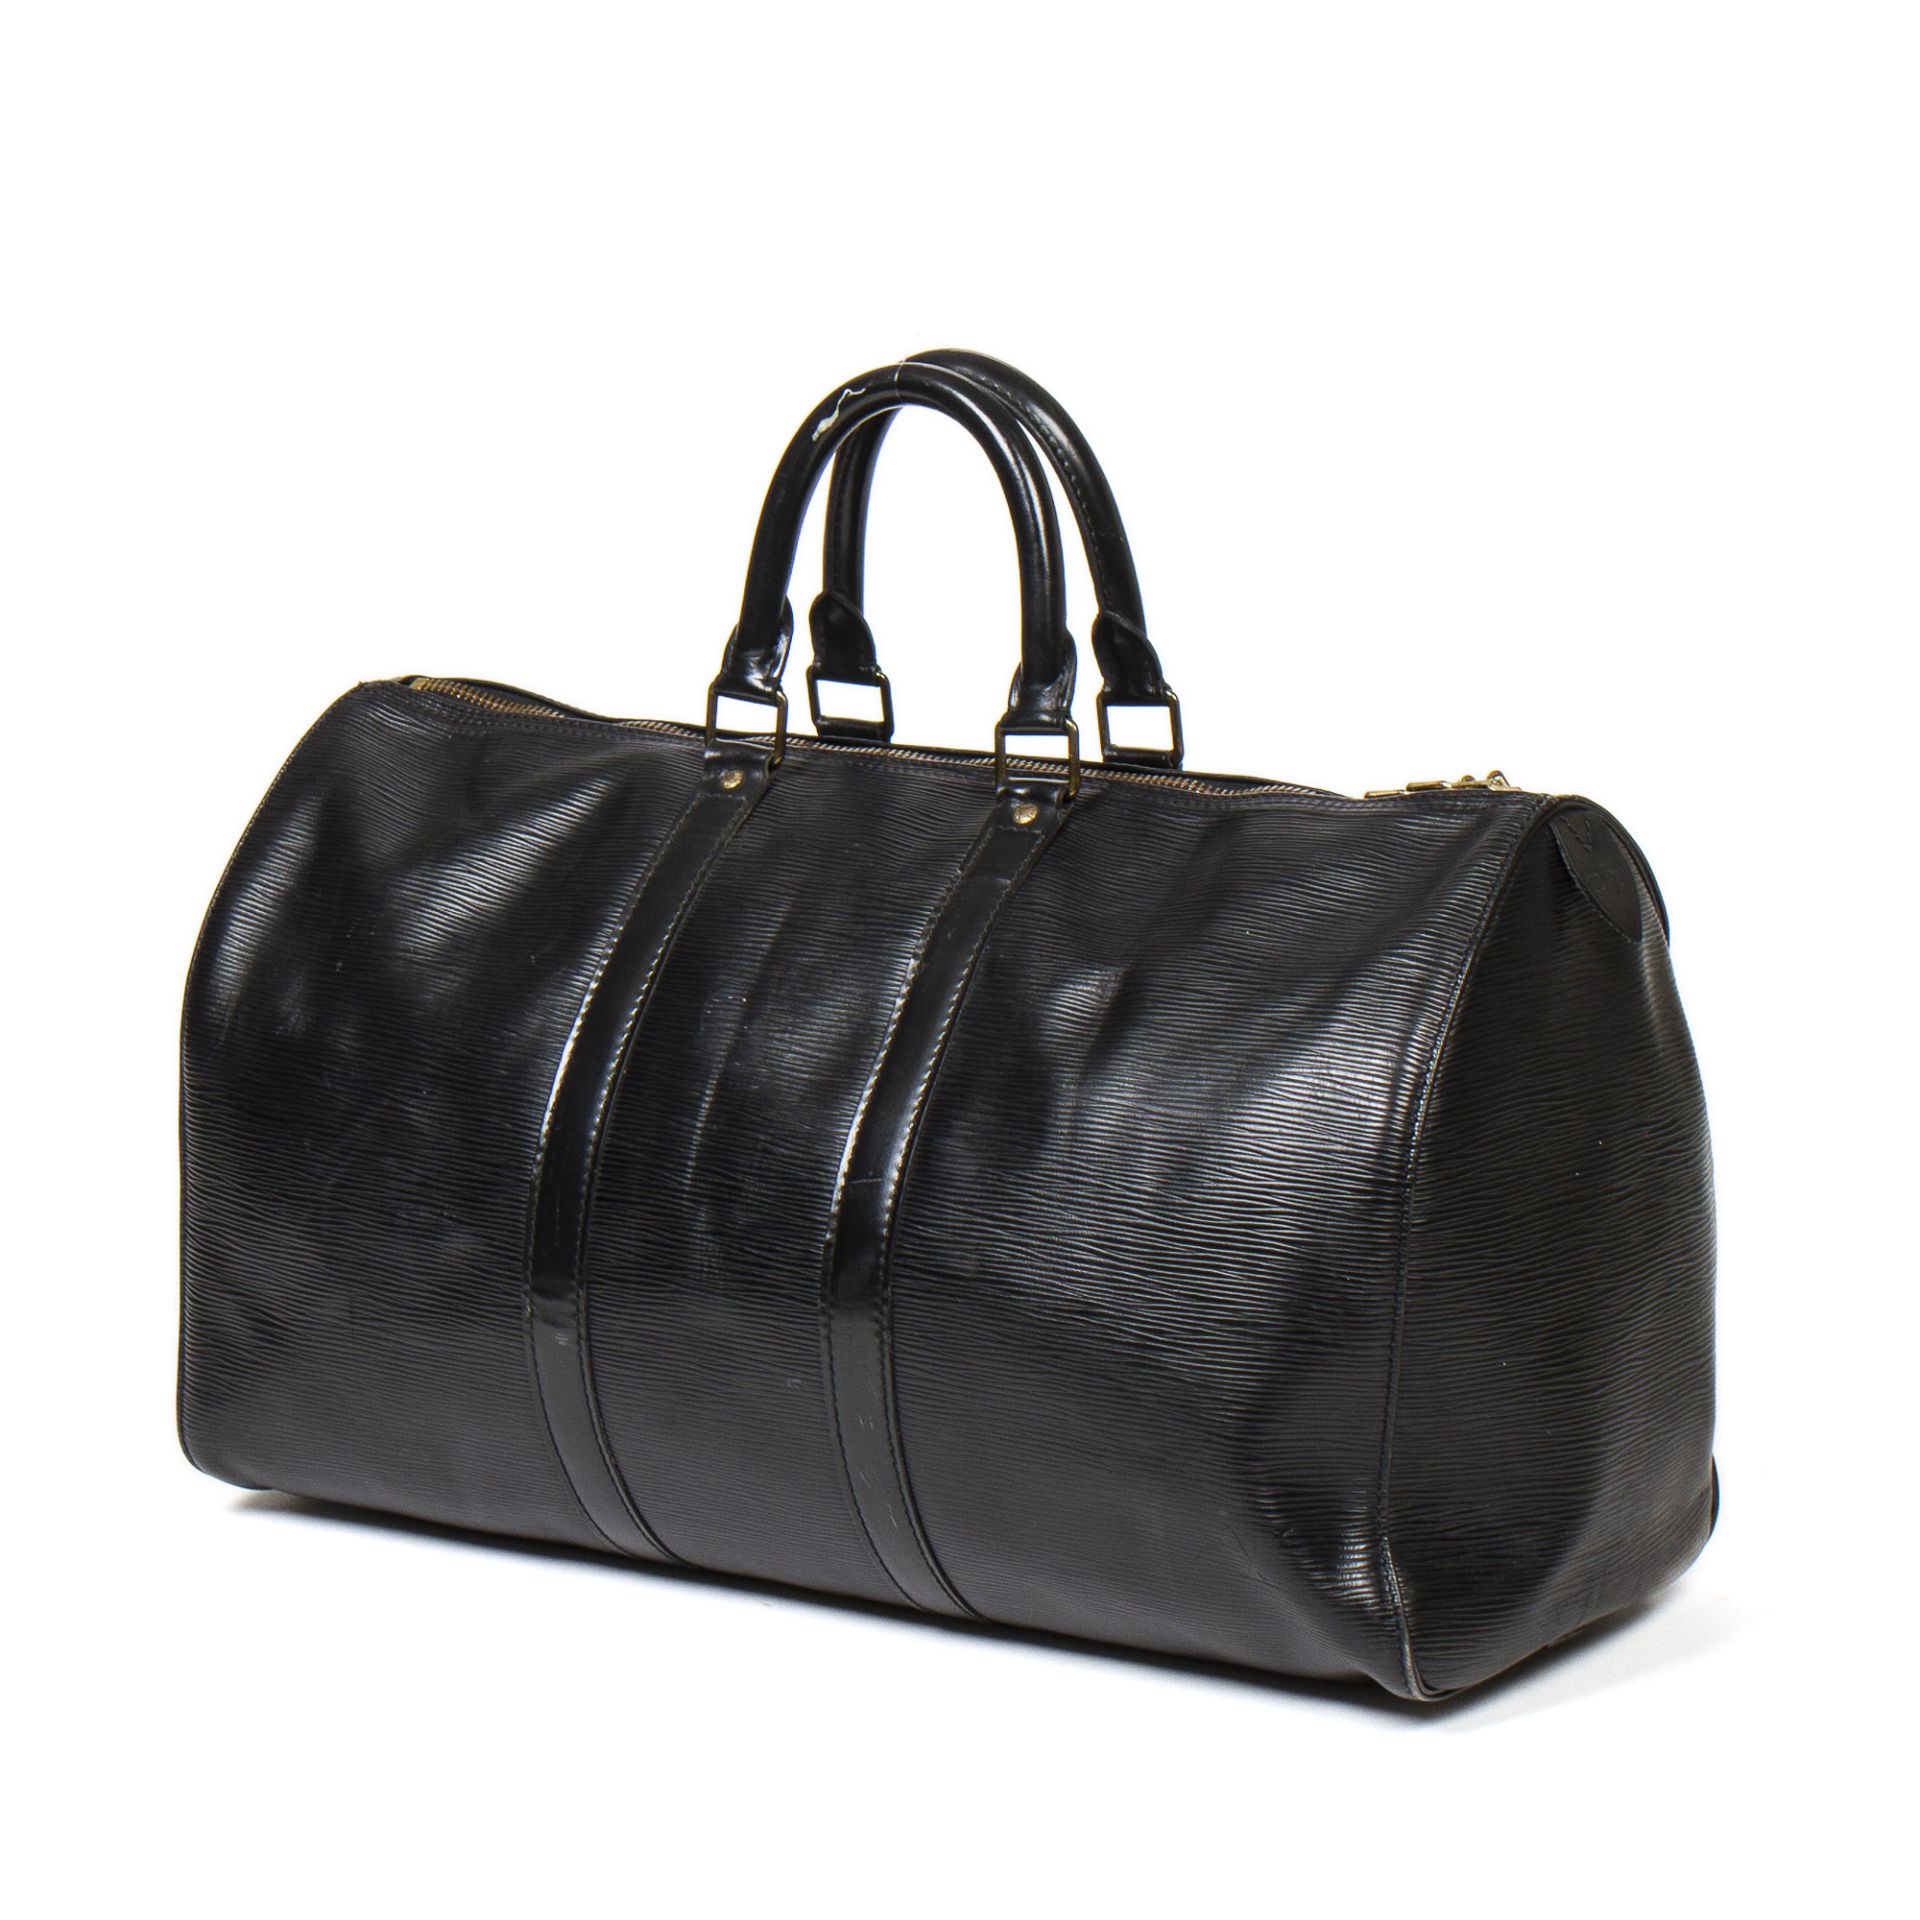 Louis Vuitton Black Keepall Travel Bag - Image 2 of 12